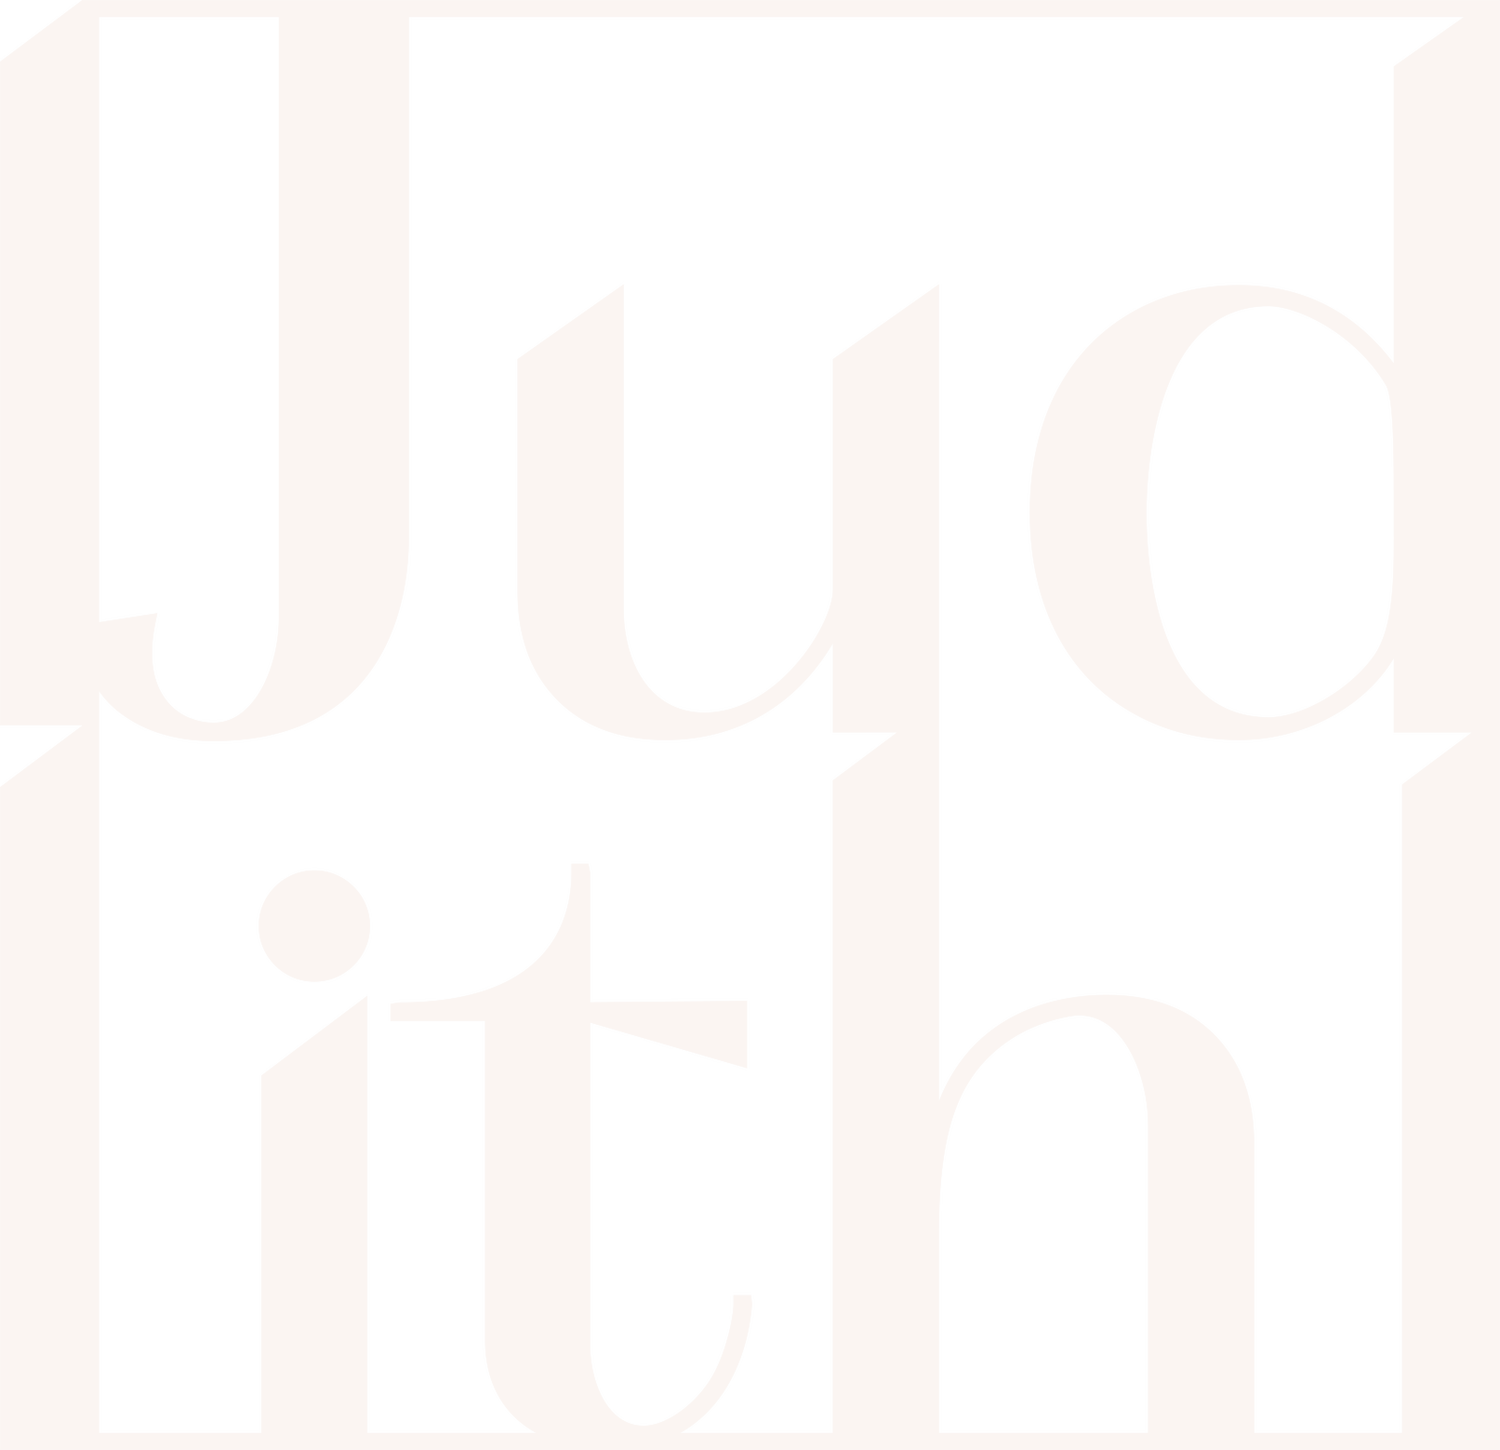 The Judith